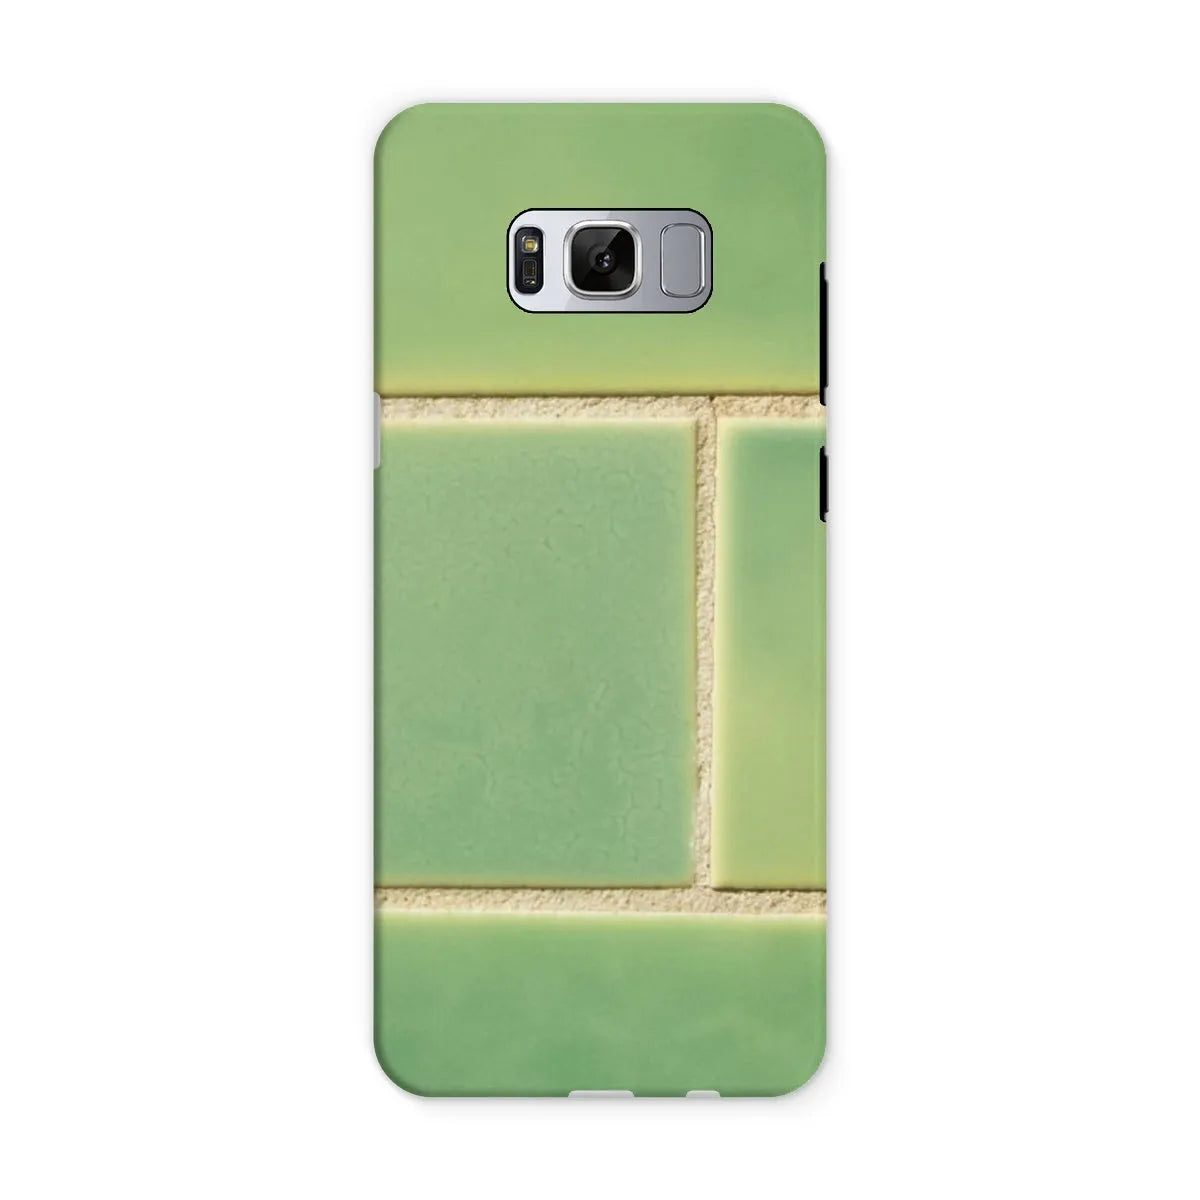 Emerald City Tough Phone Case - Samsung Galaxy S8 / Matte - Mobile Phone Cases - Aesthetic Art